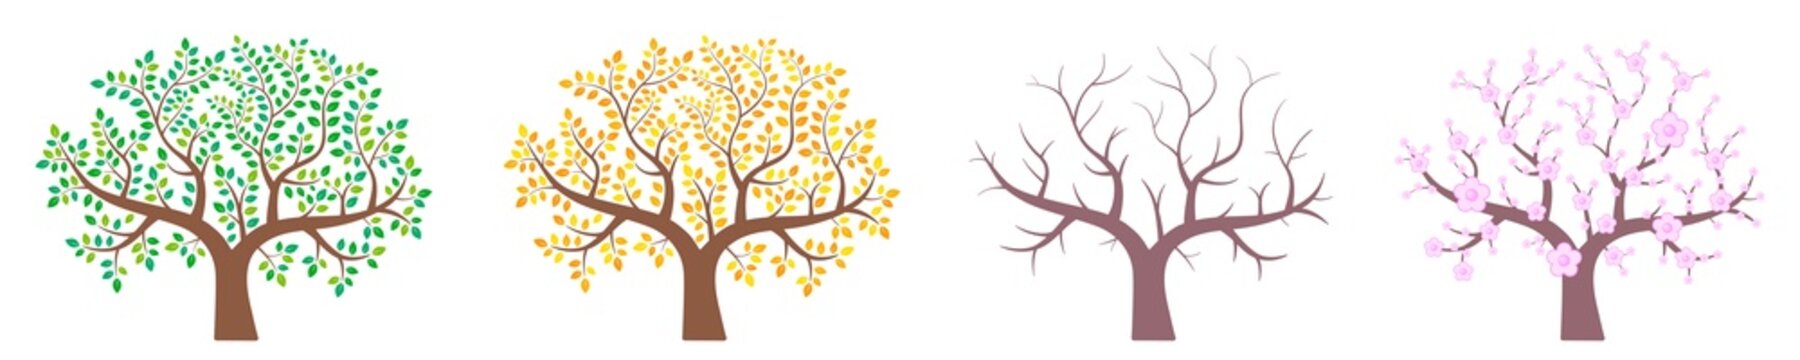 Set of trees. Change of seasons. Vector illustration